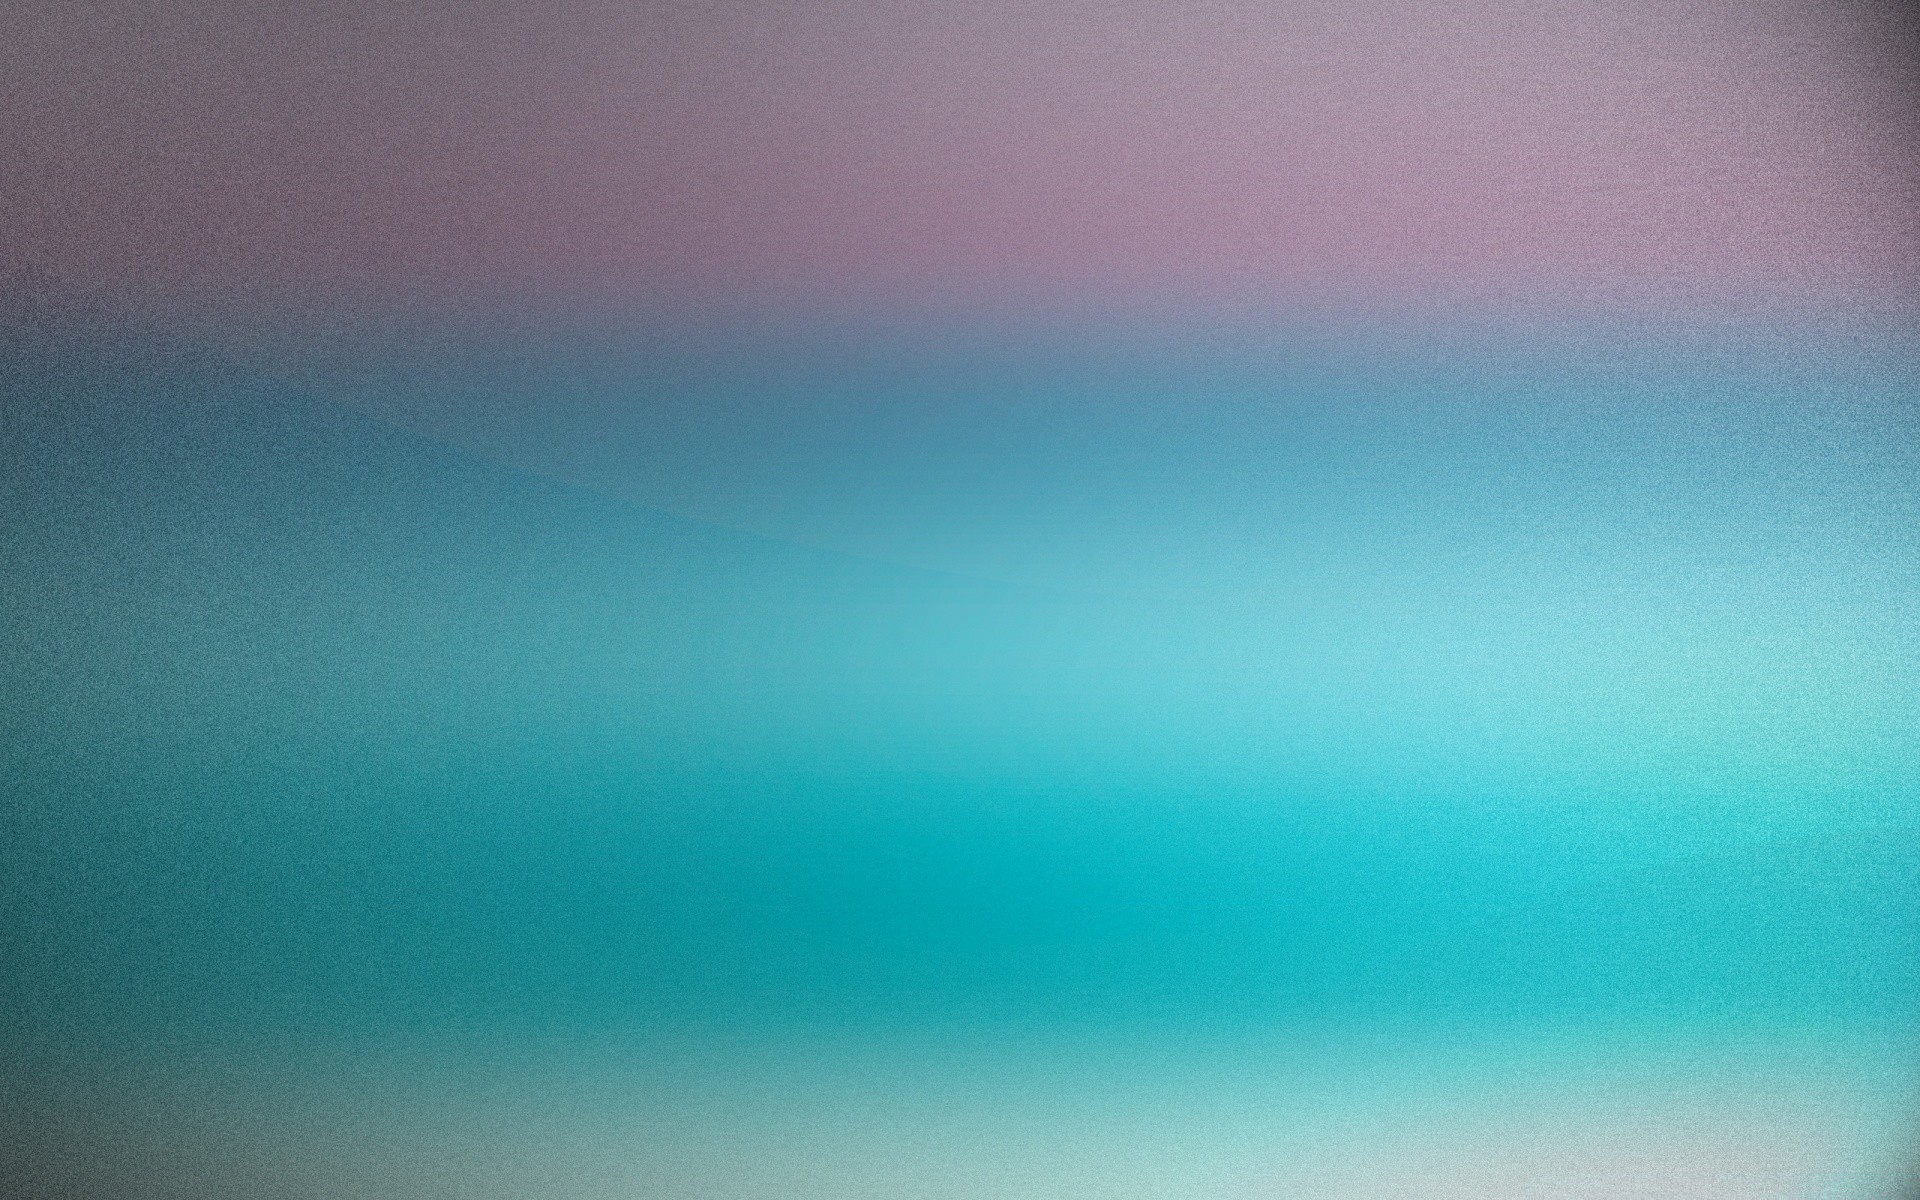 abstract blur background art light graphic wallpaper pastel color sky desktop pattern gradient texture landscape illustration creation spectrum design element